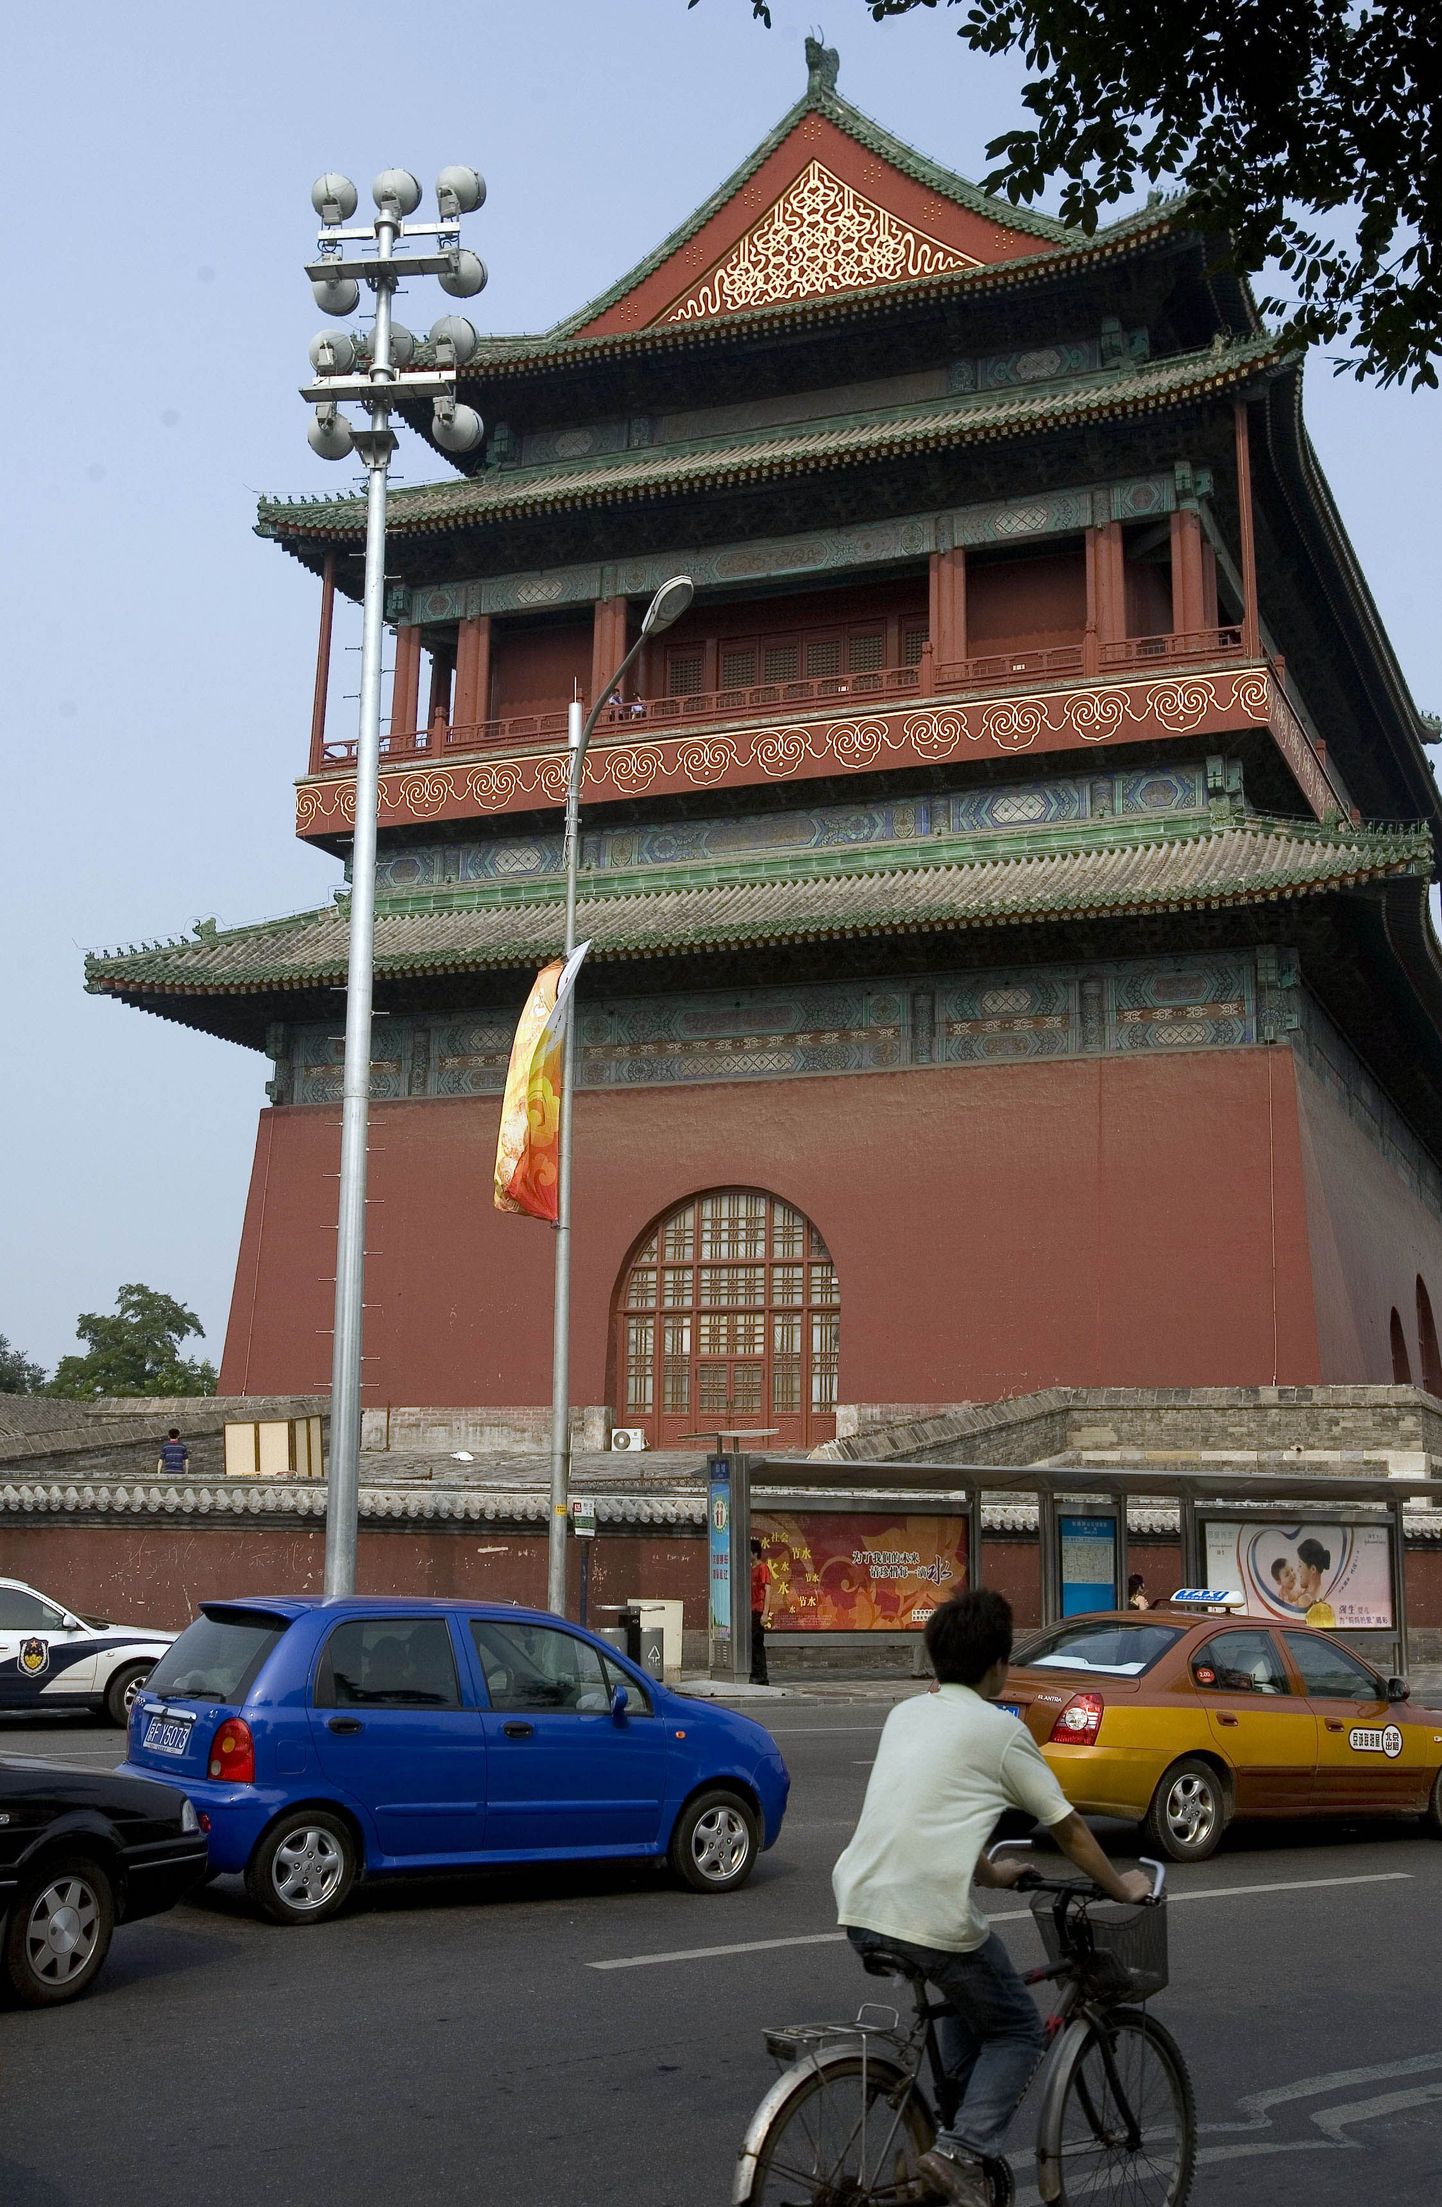 Pekingis asuv Drum Tower ehk Trummi Torn